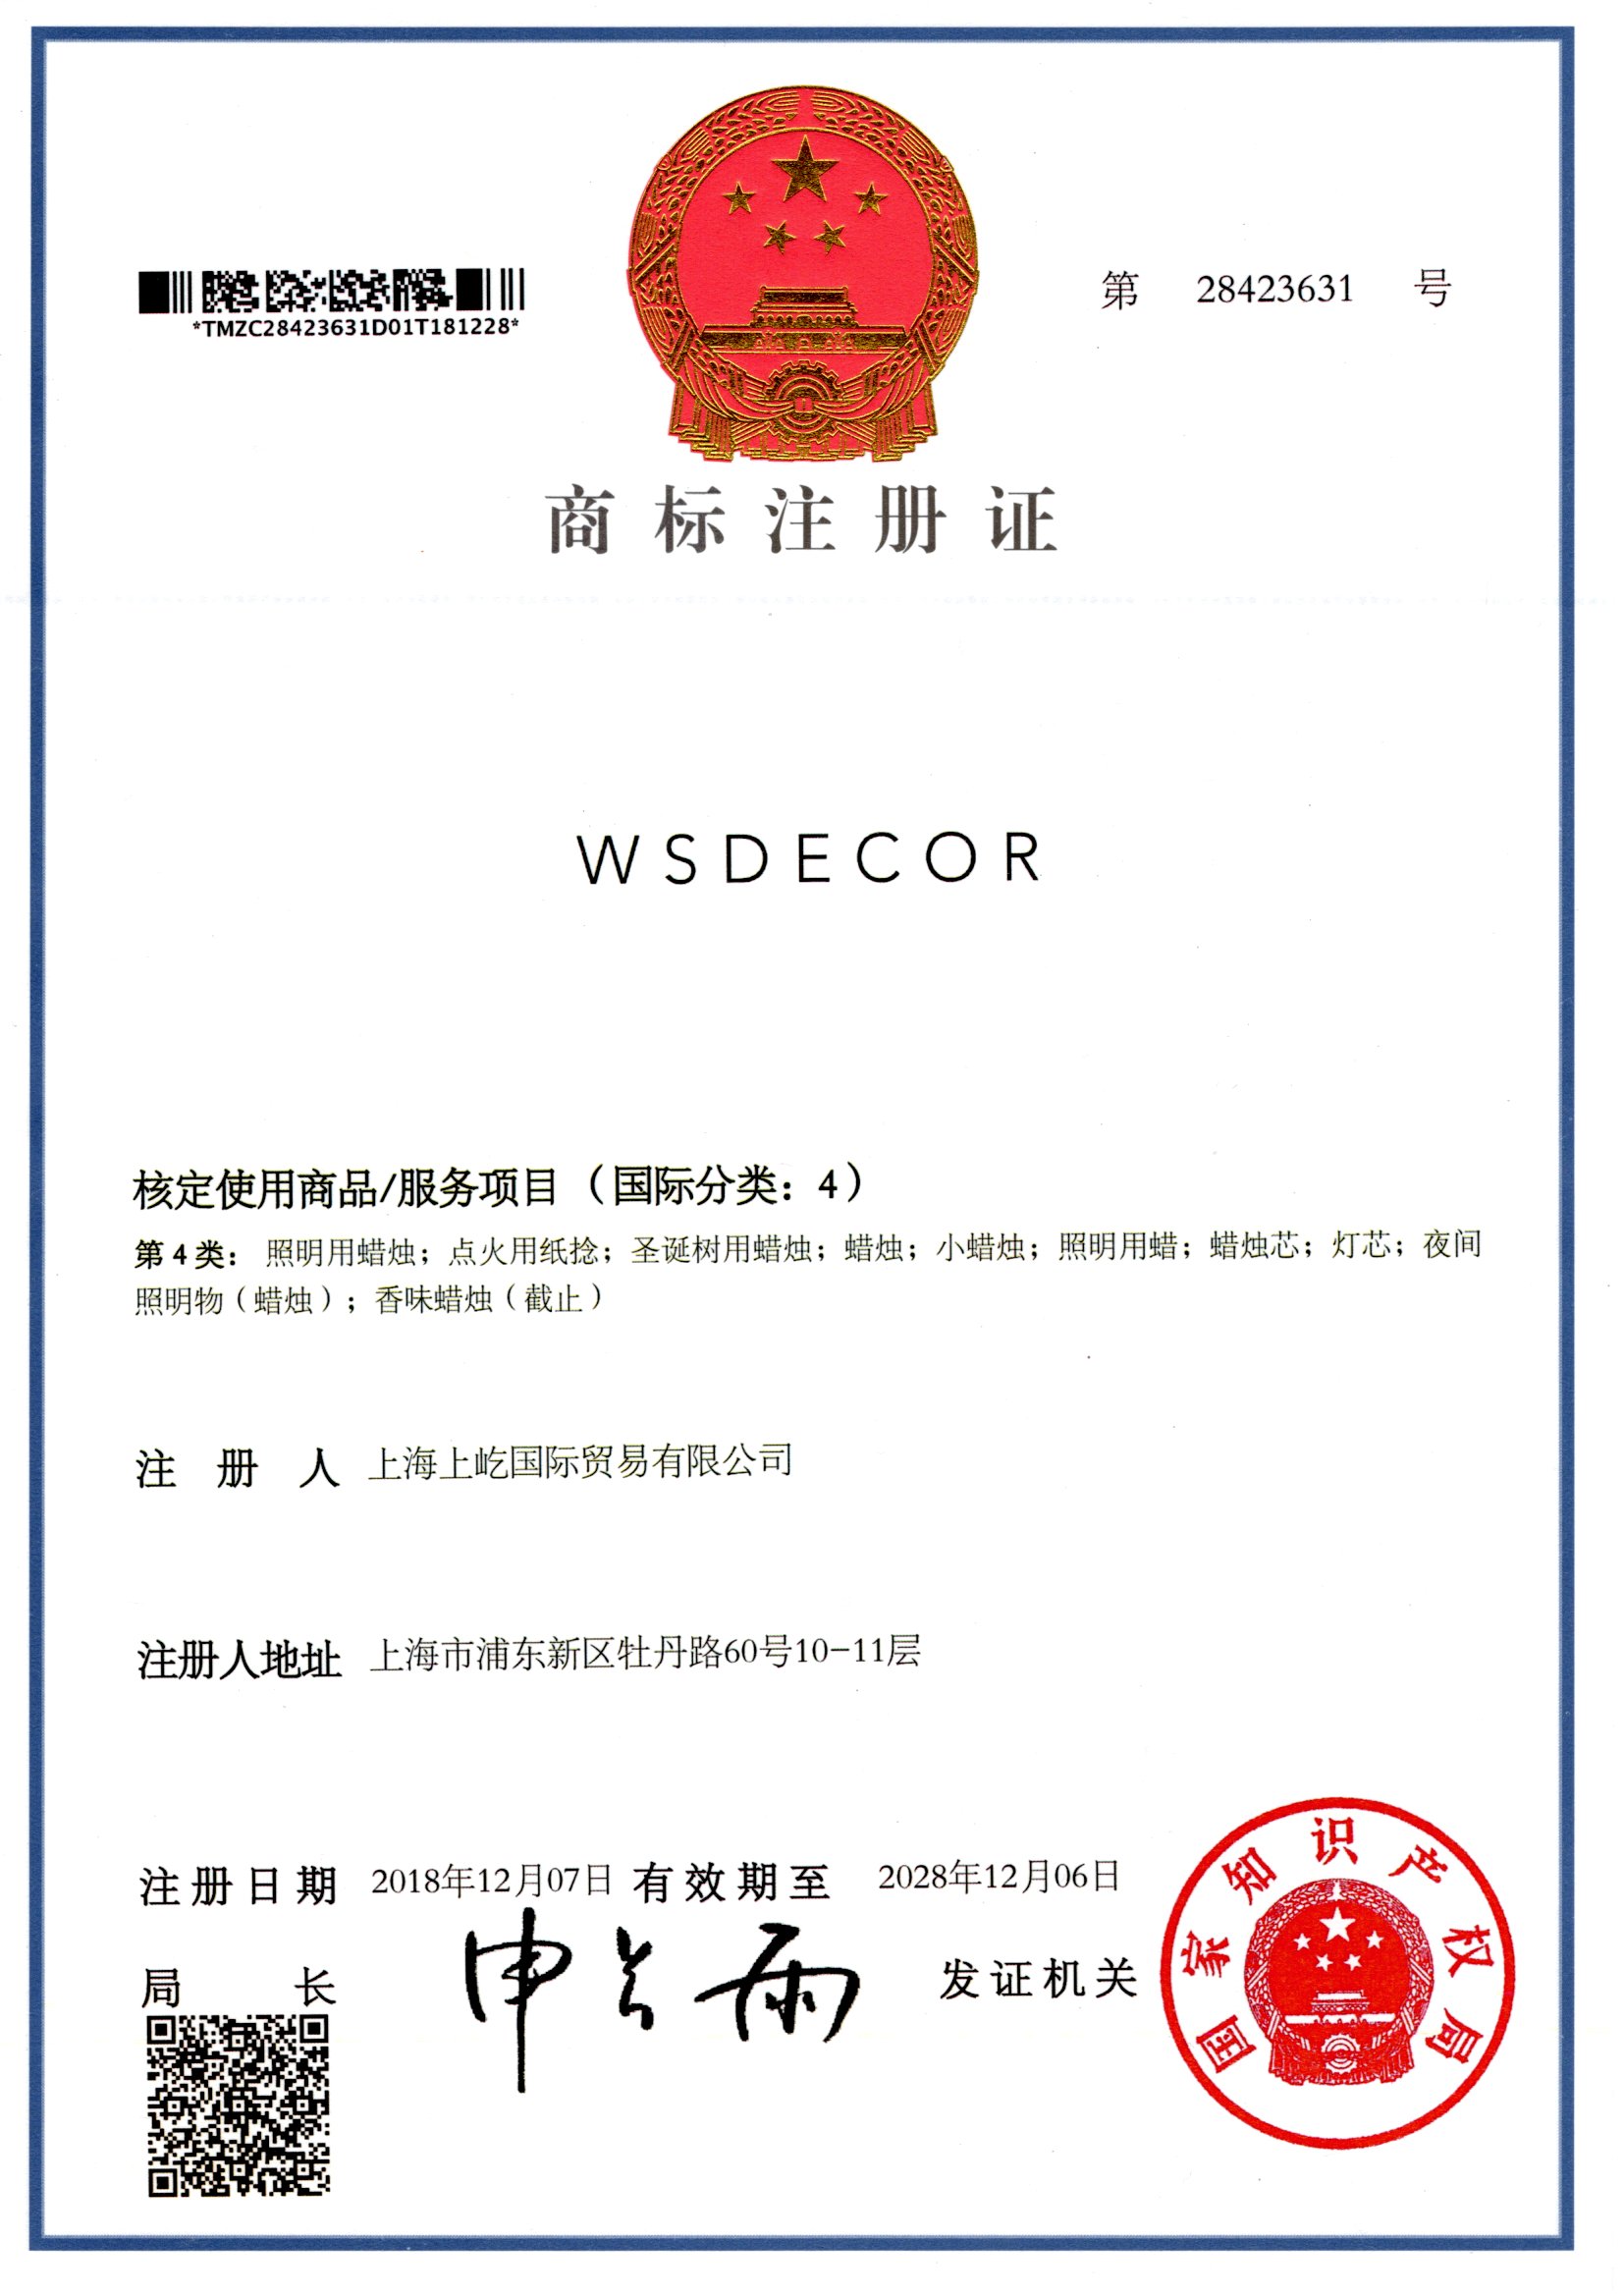 Trademark registration certificate No. 28423631